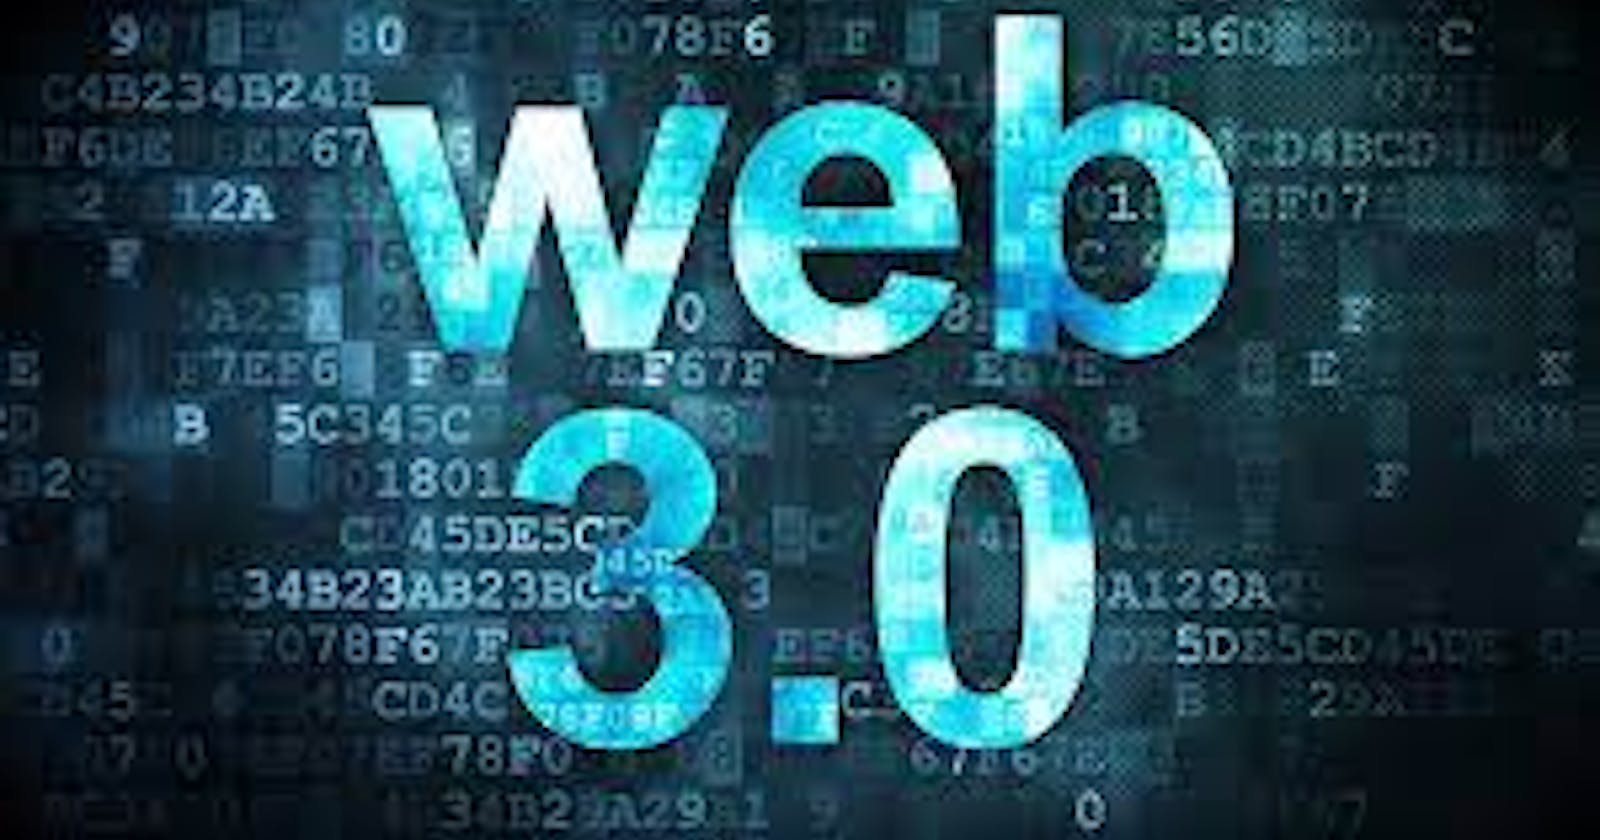 WEB 3.0 (The Semantic Web)